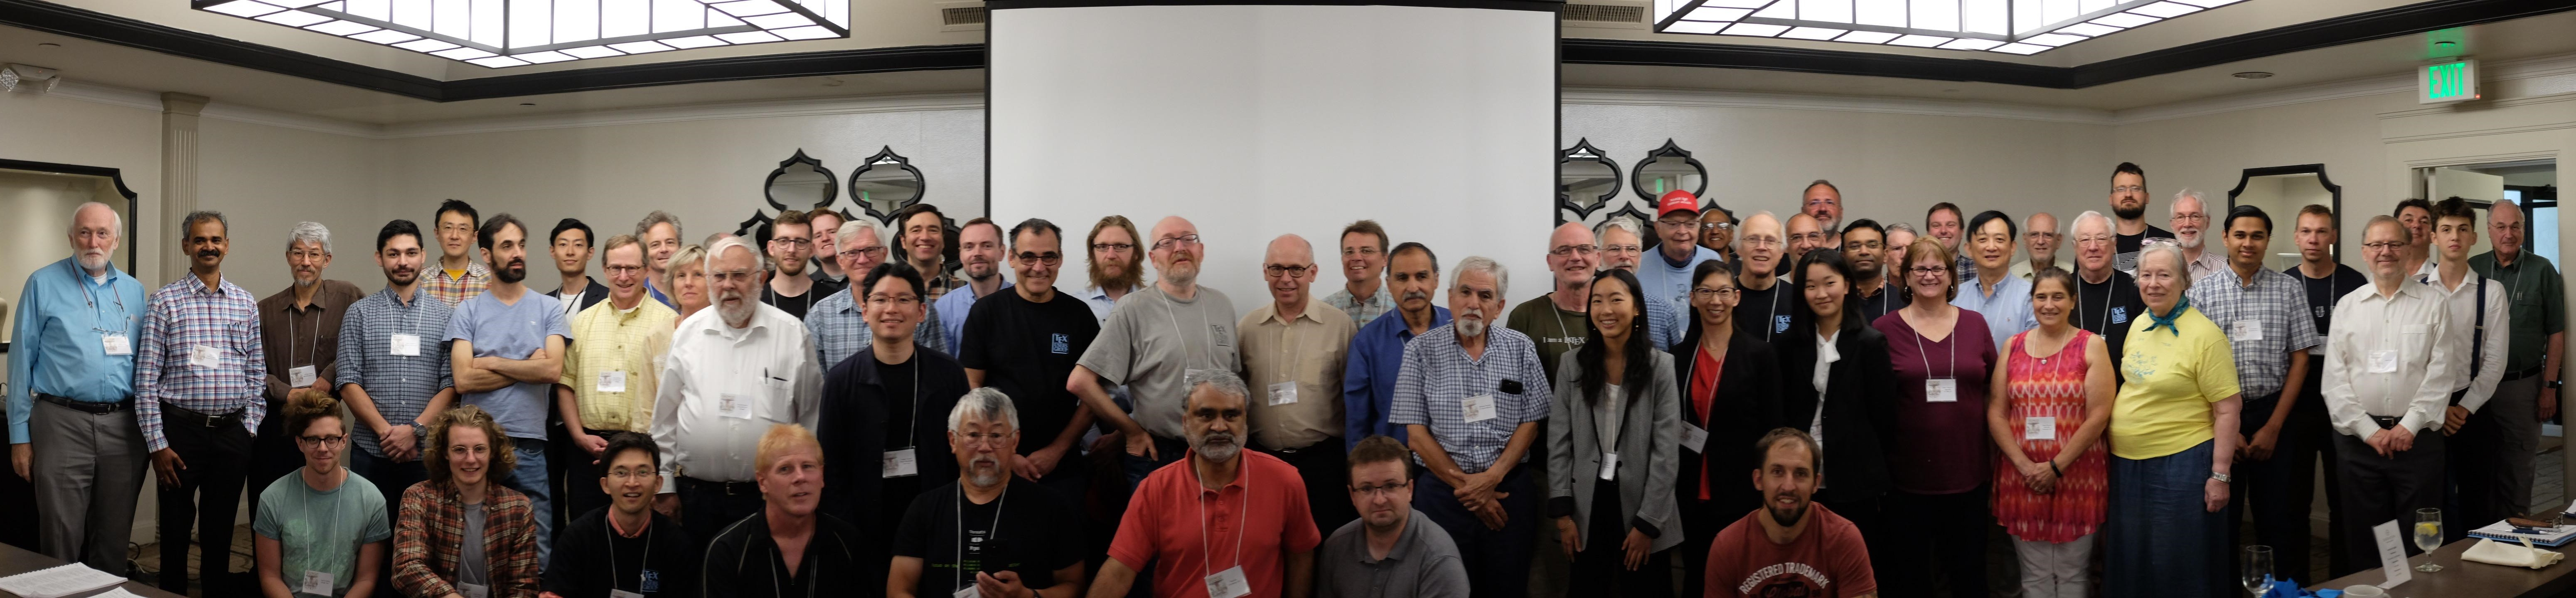 Group photo at TUG 2019 Conference, Palo Alto, CA